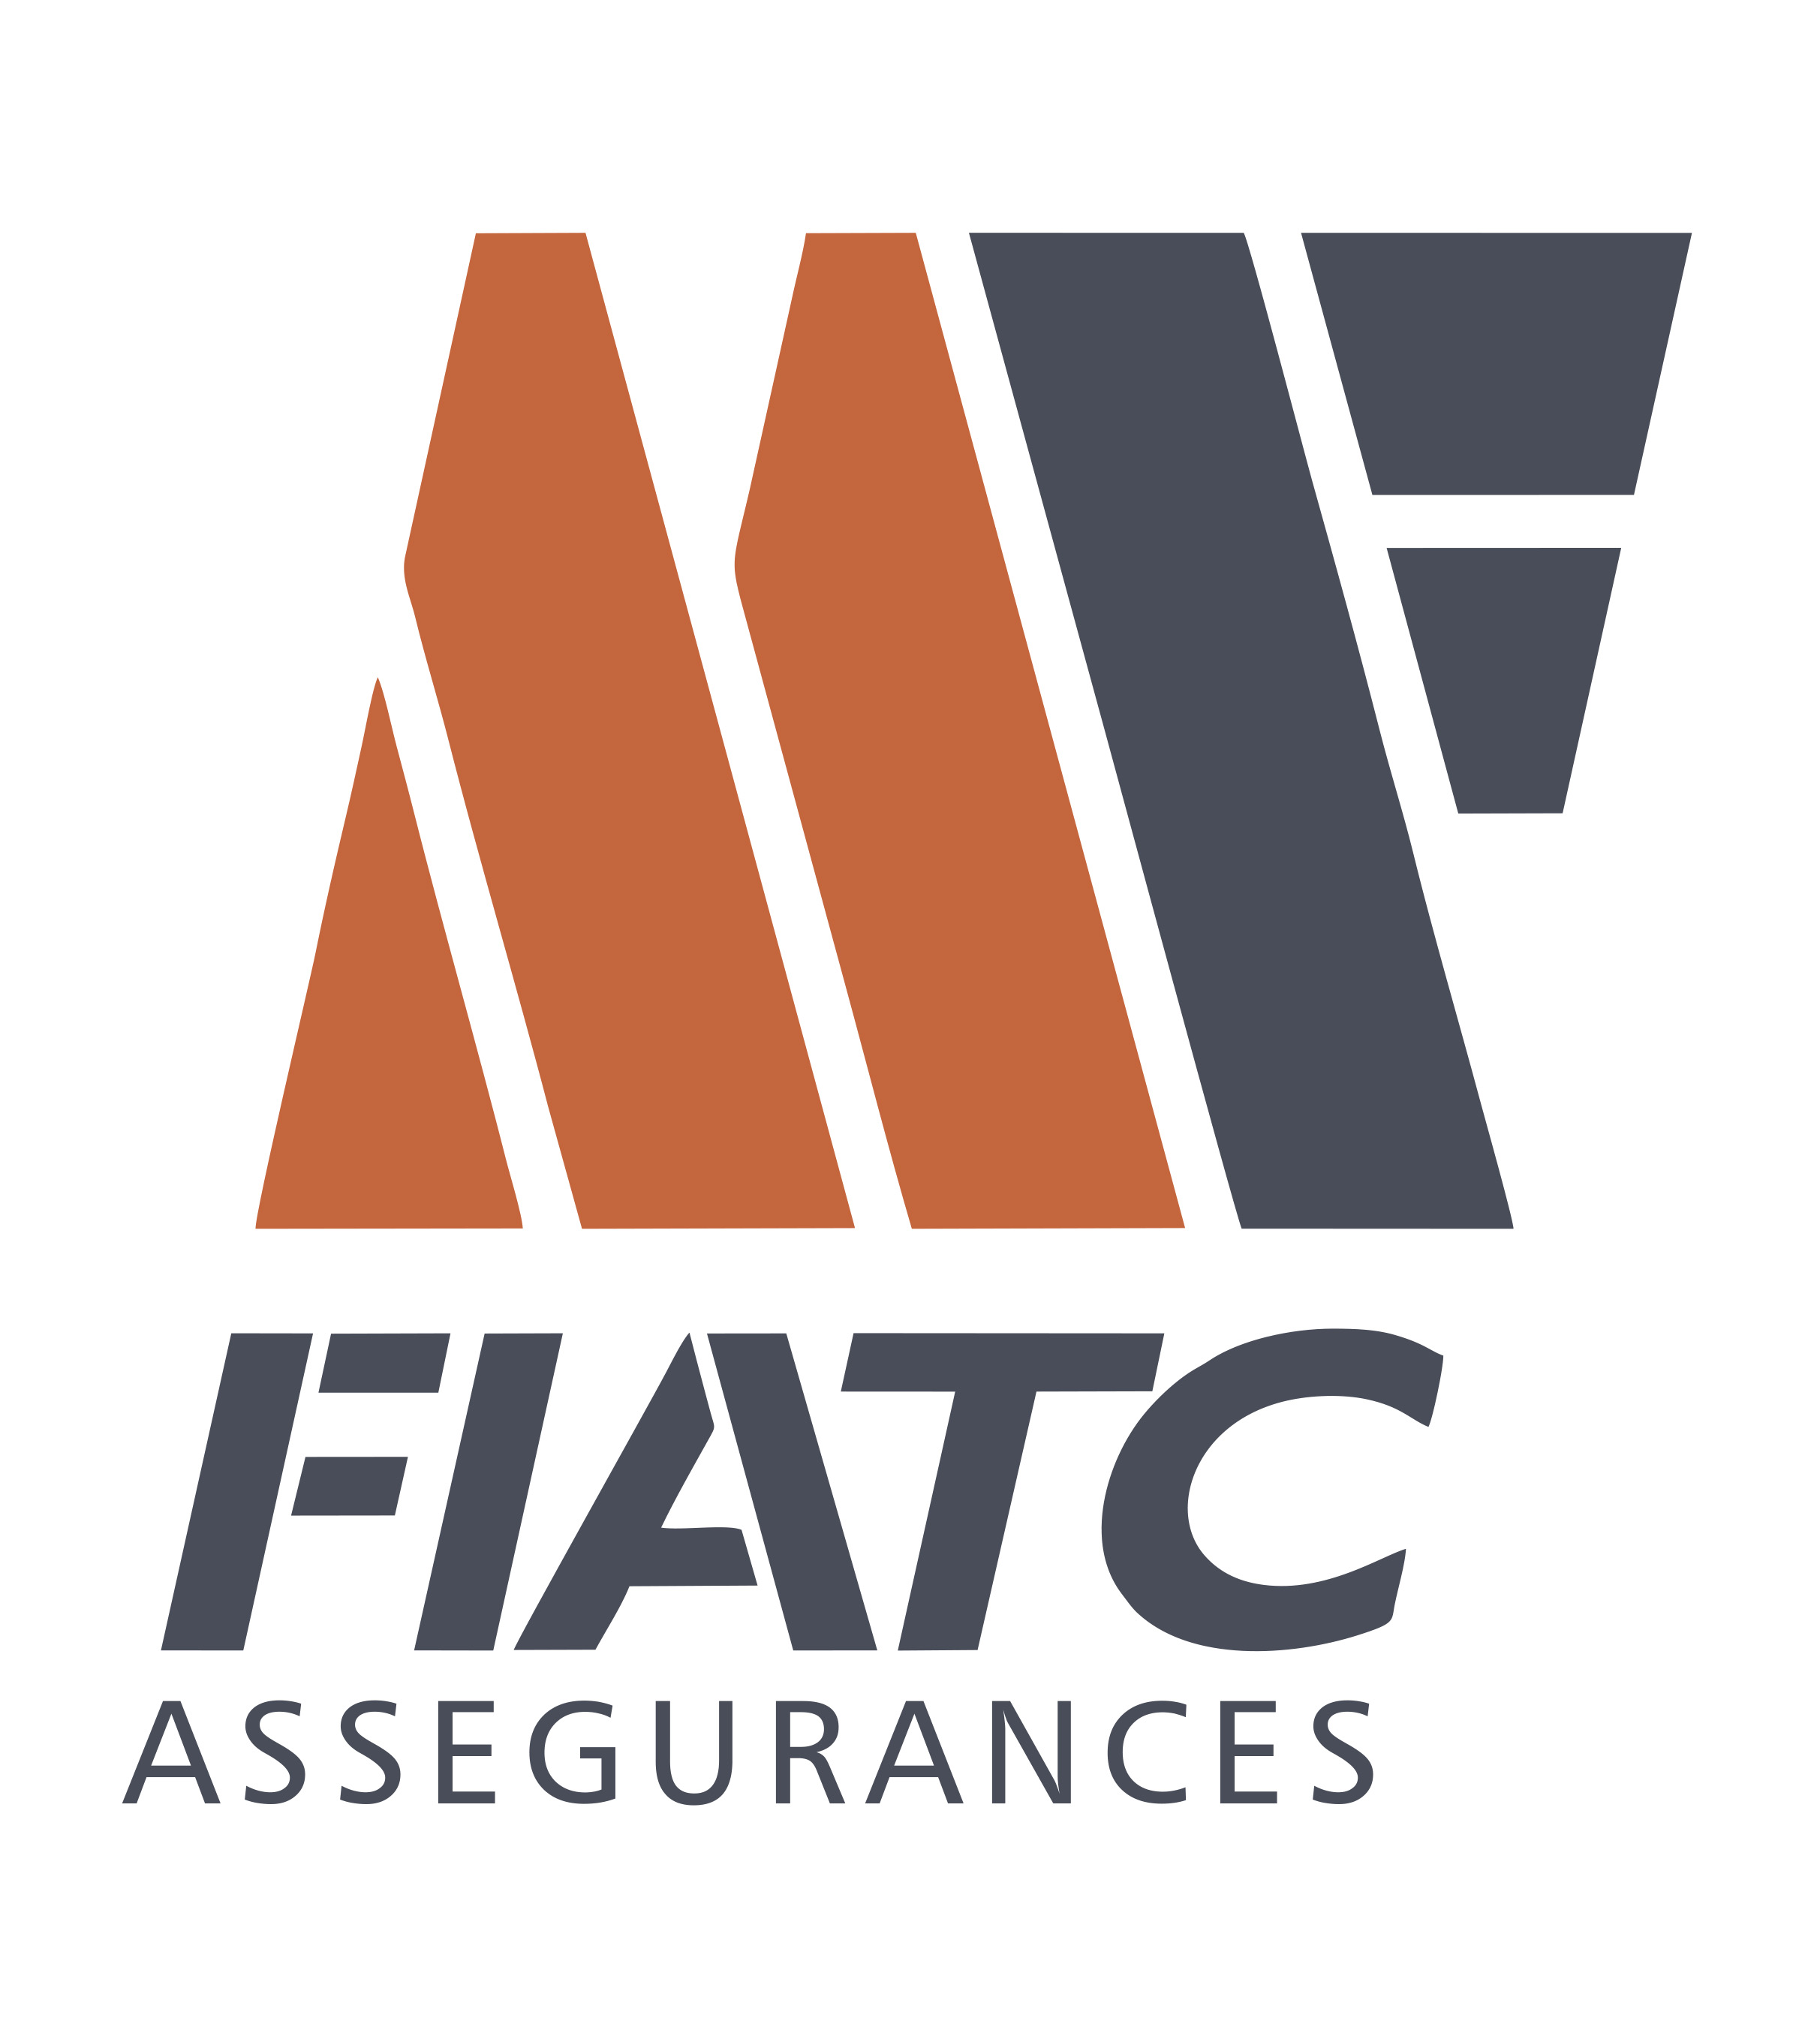 FIATC assegurances